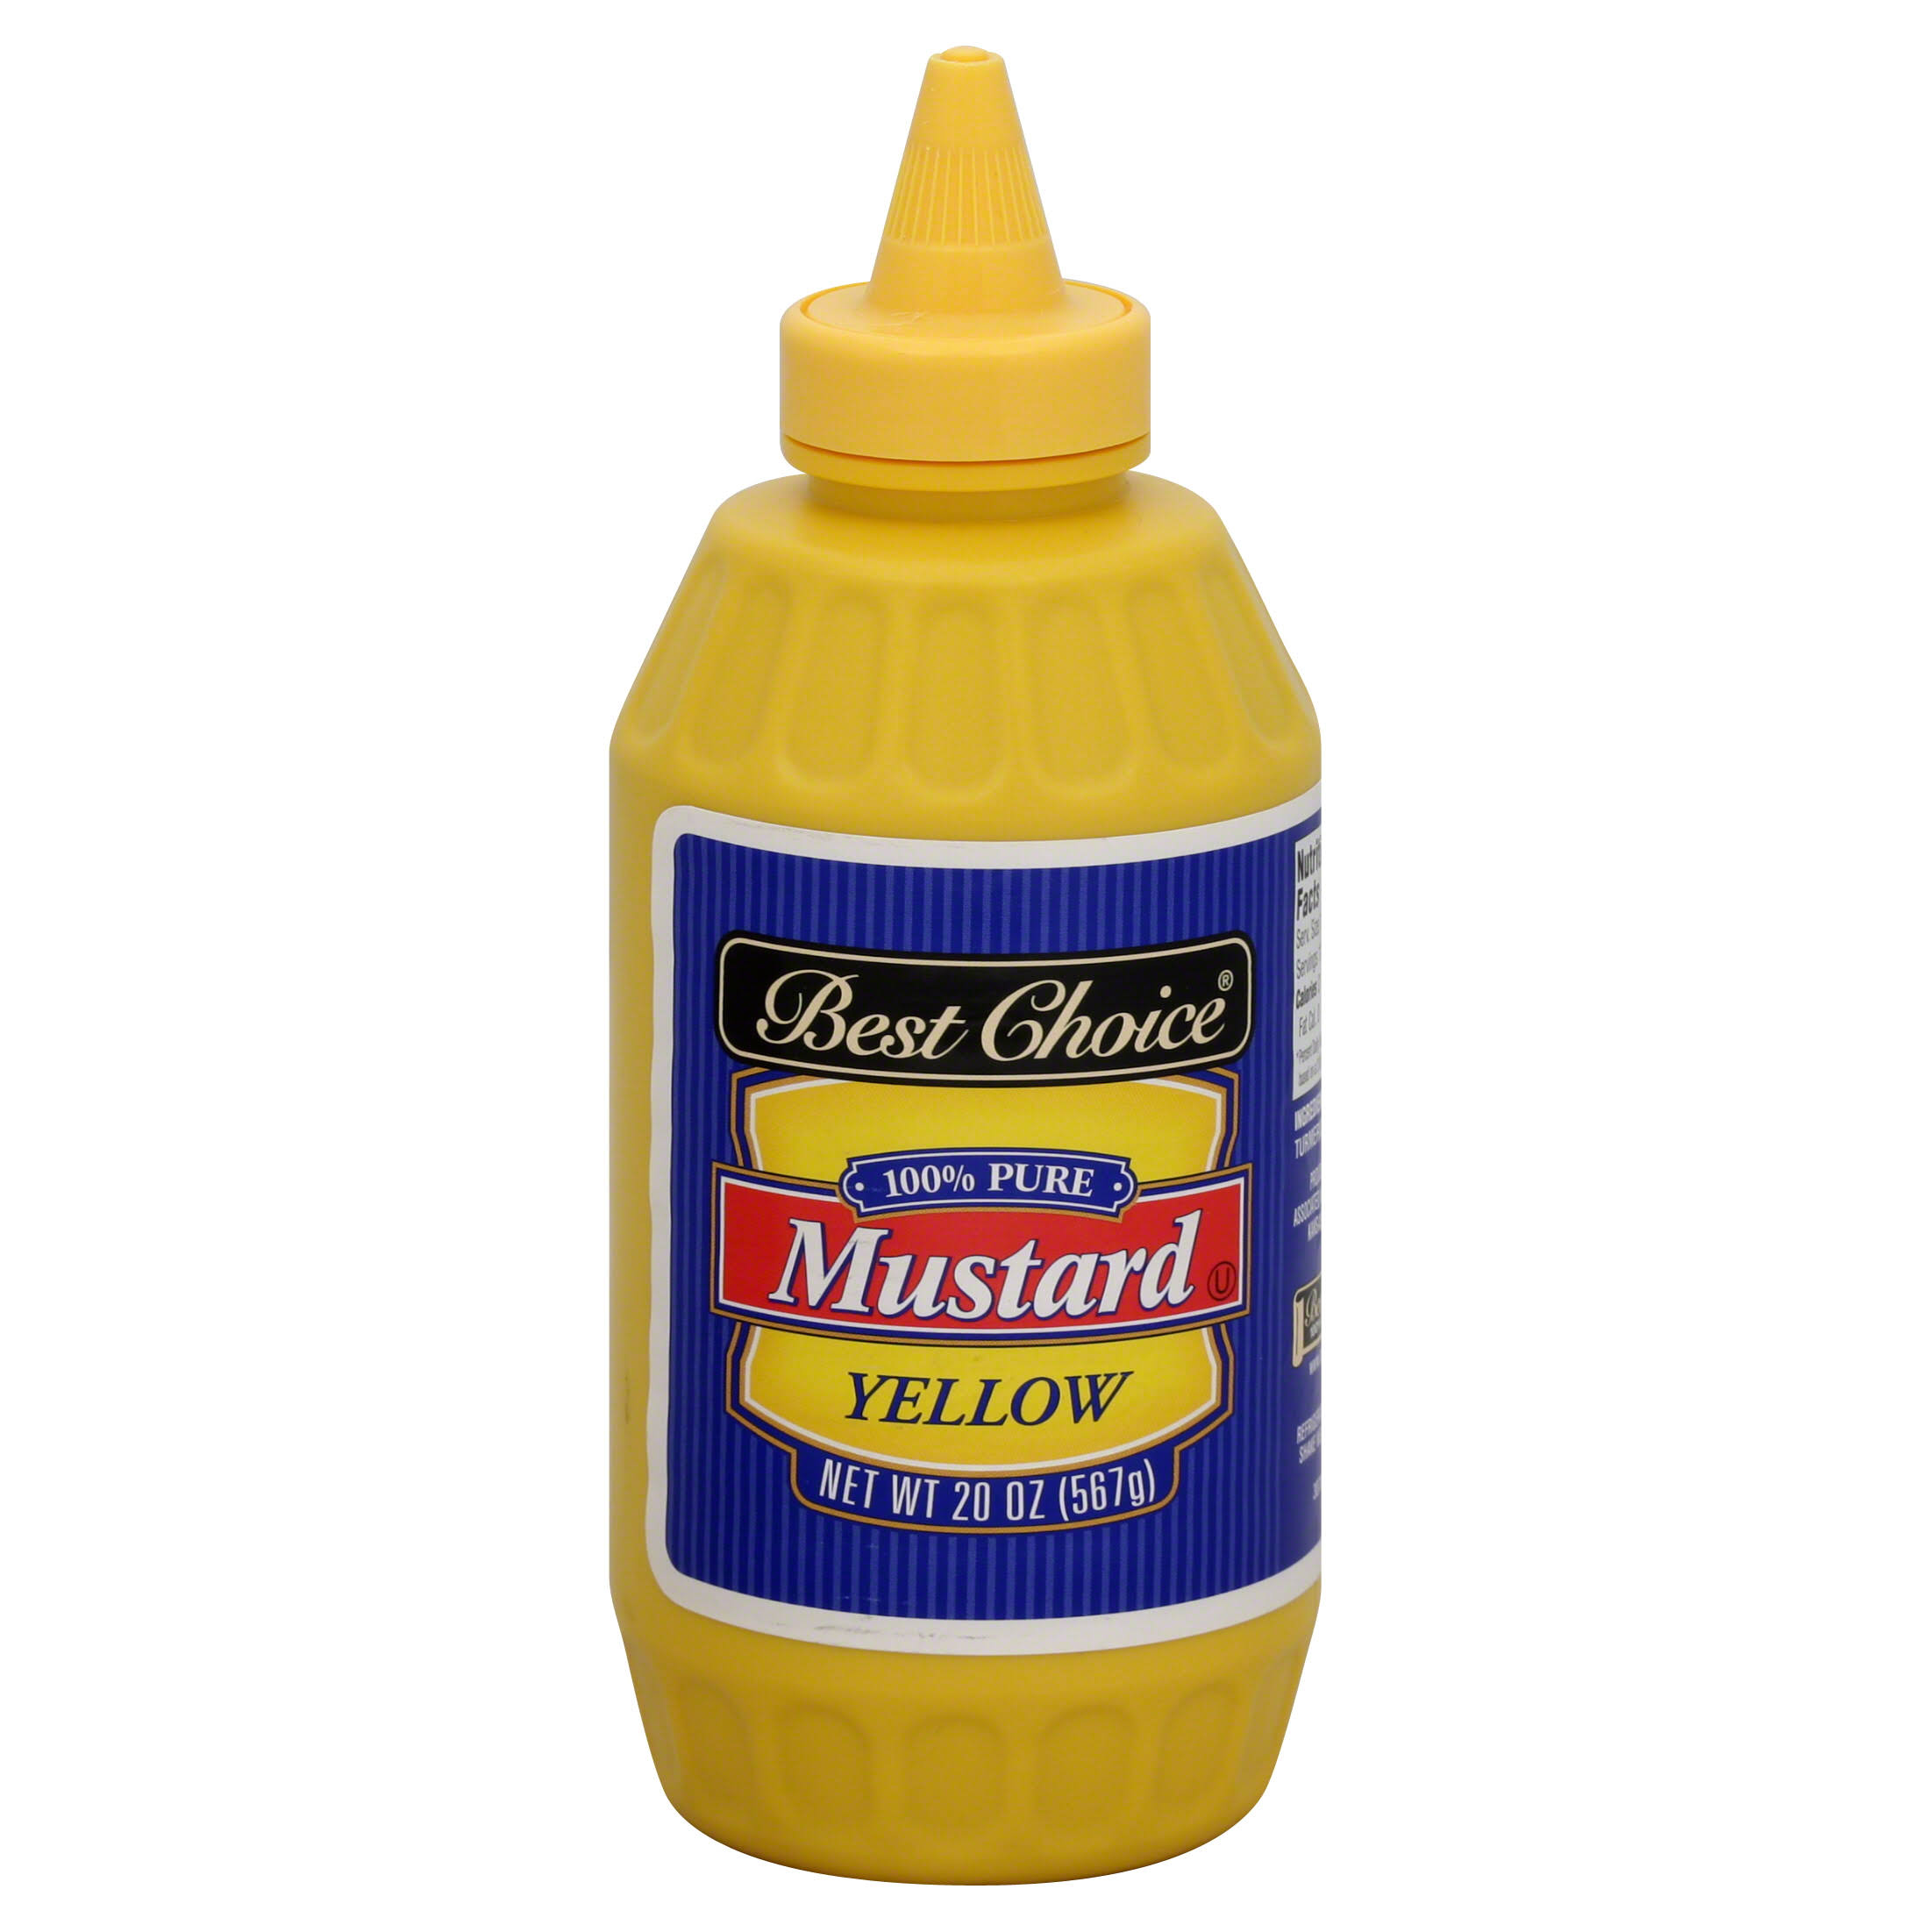 Best Choice Mustard, Yellow - 20 oz